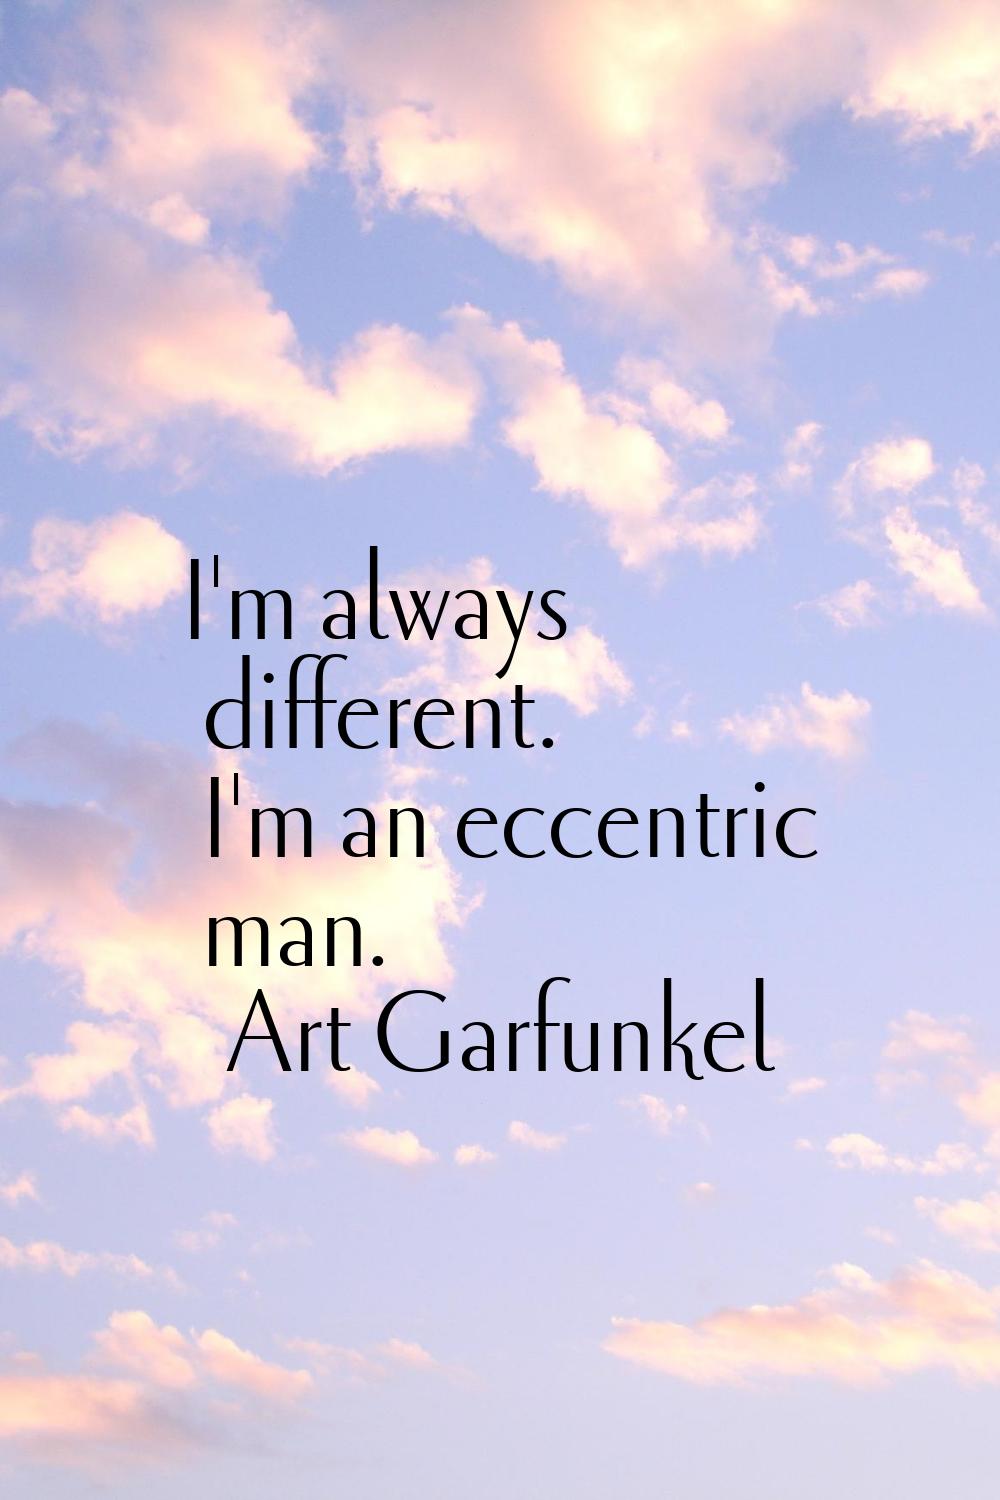 I'm always different. I'm an eccentric man.